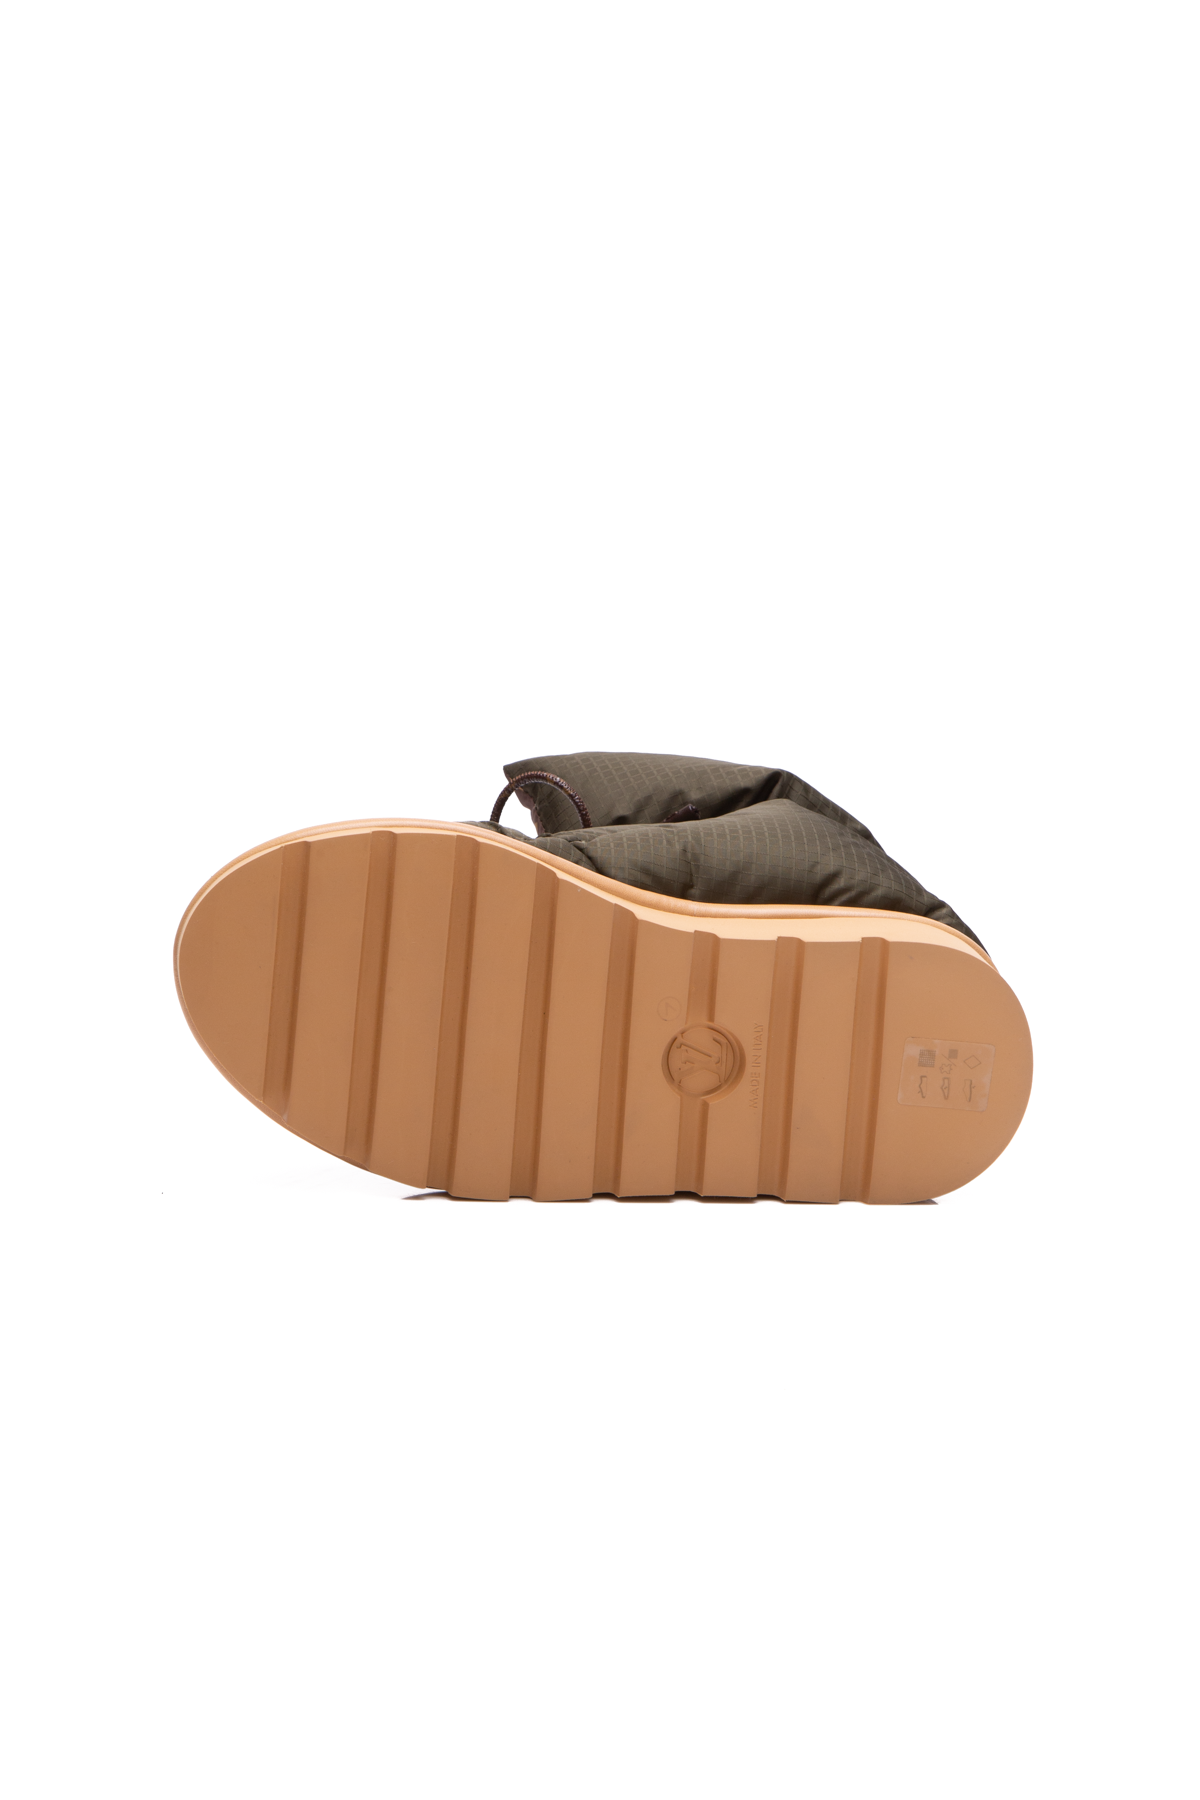 Louis Vuitton Pillow Comfort Ankle Boot - Size 37